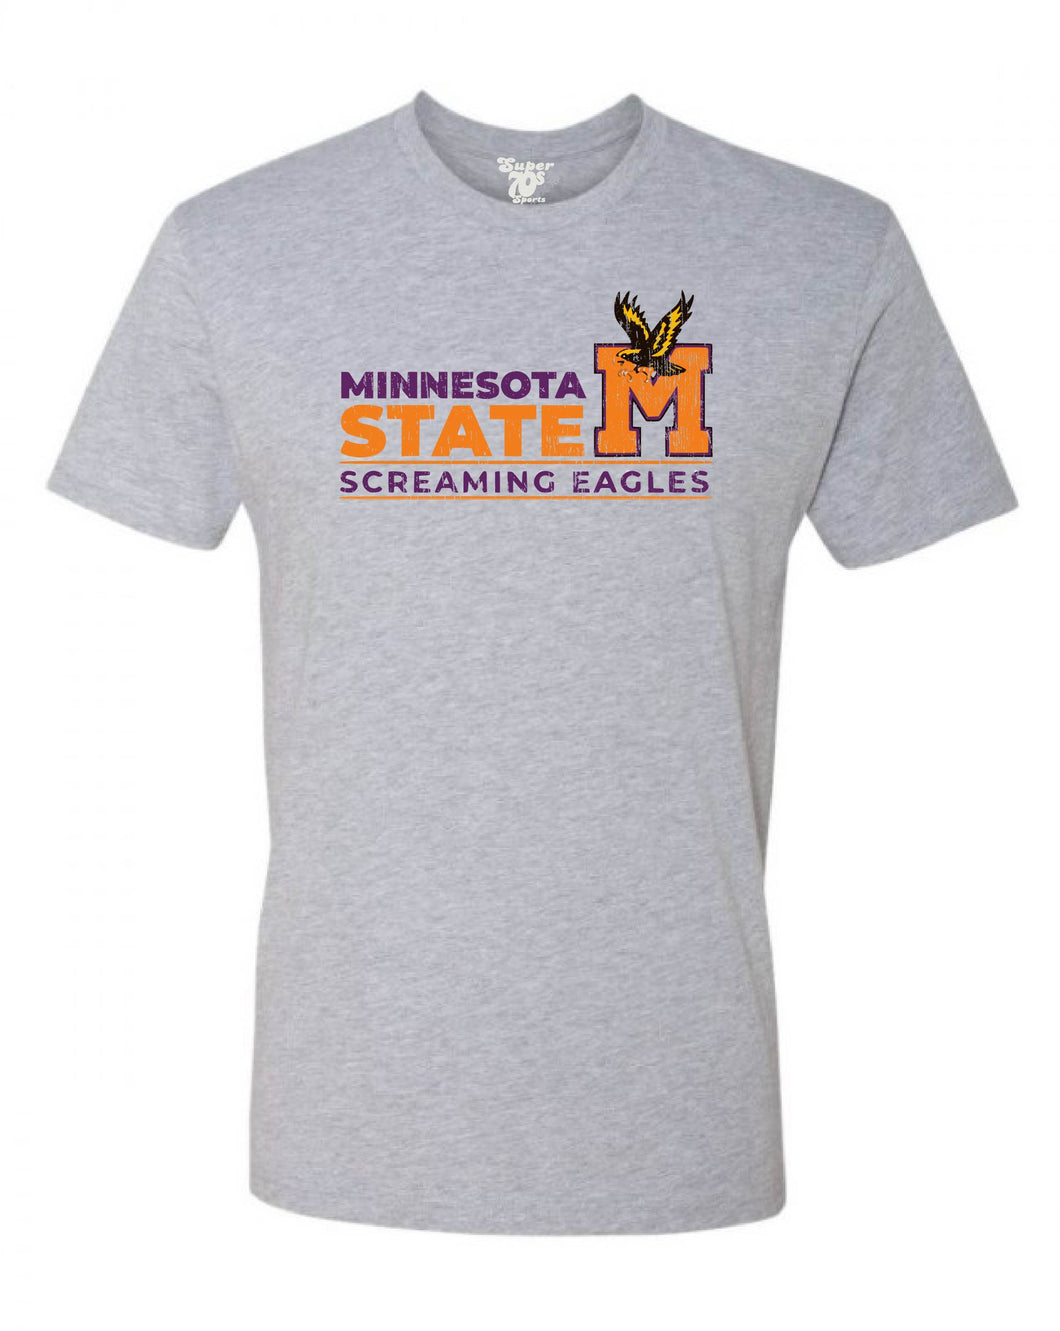 Minnesota State Screaming Eagles Tee